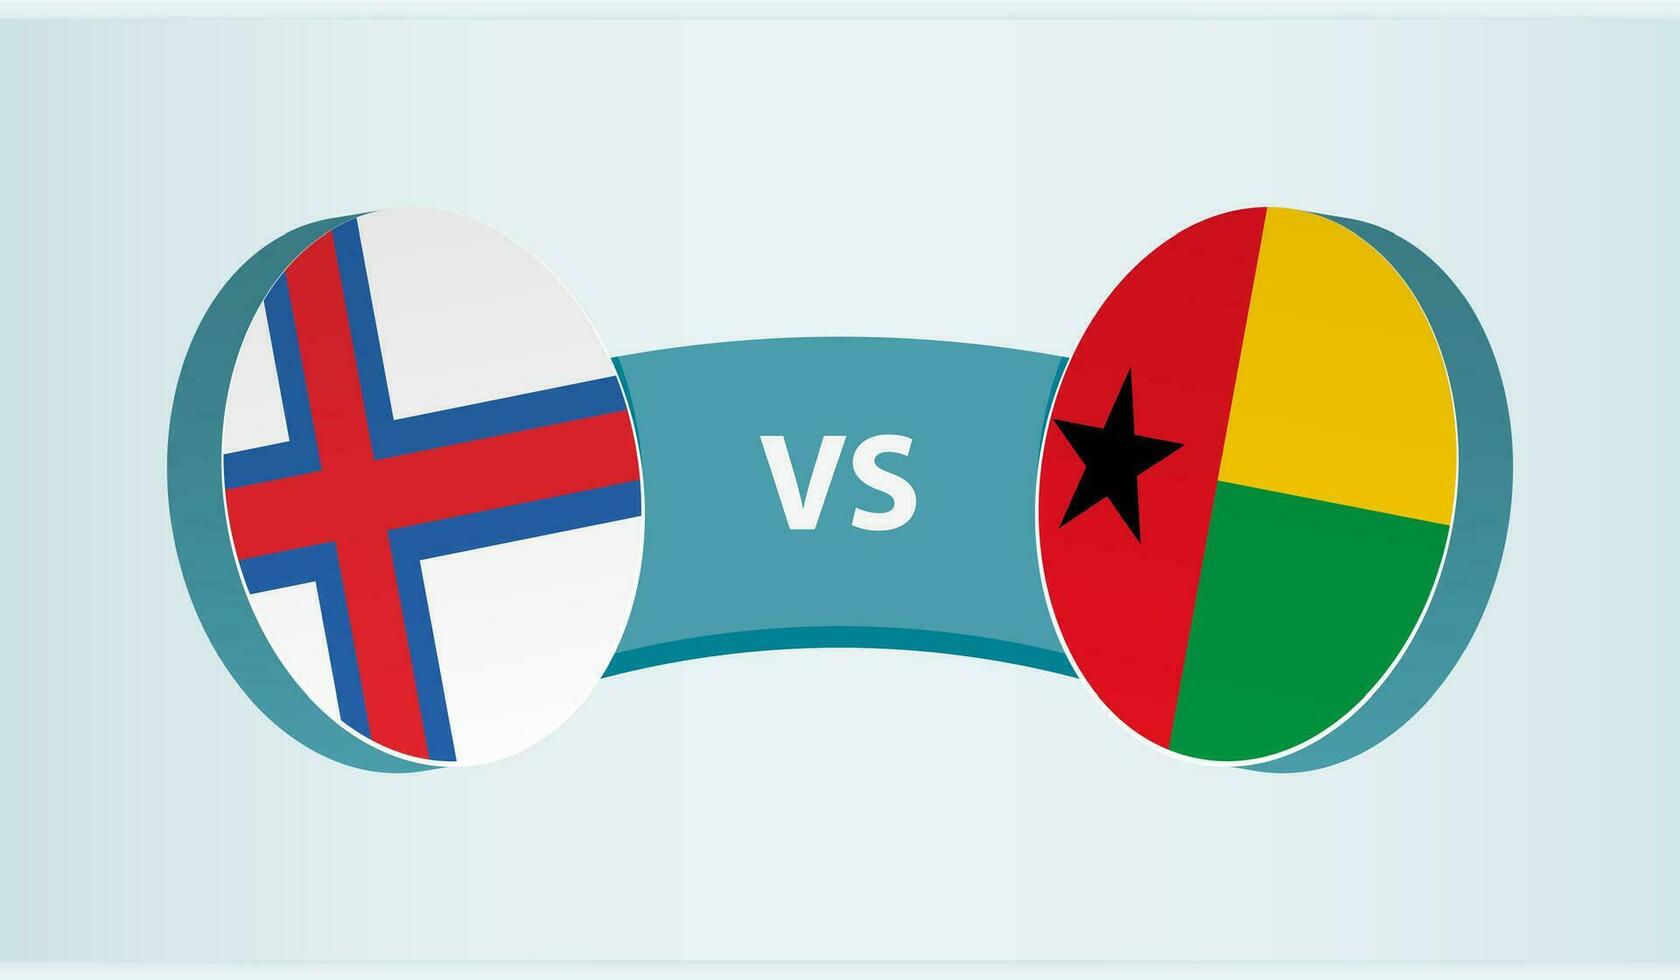 Faroe Islands versus Guinea-Bissau, team sports competition concept. vector